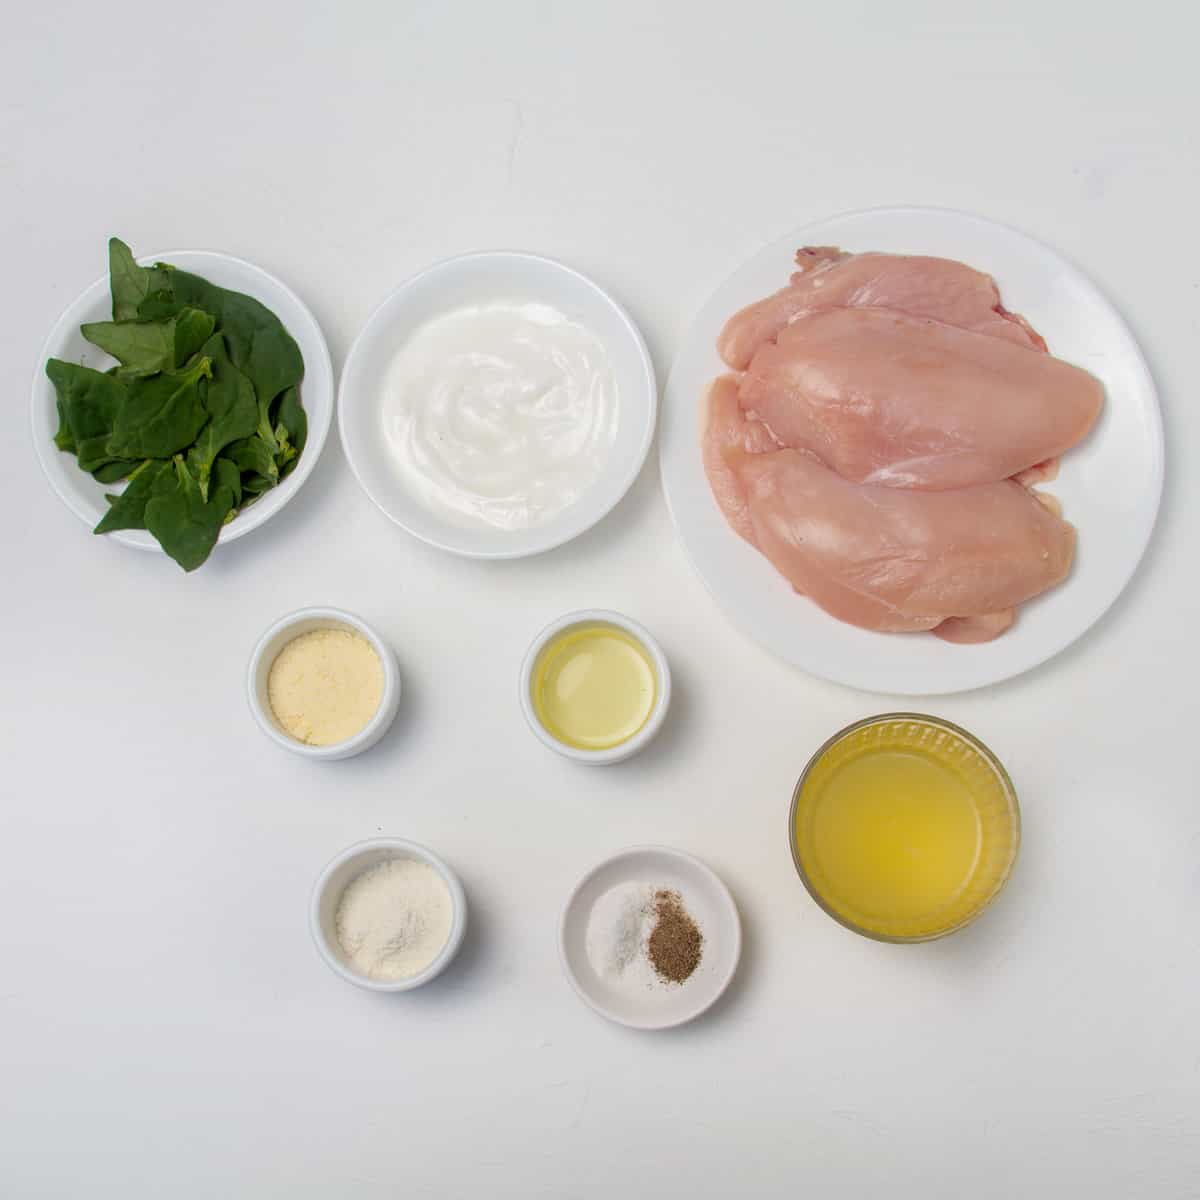 Raw chicken breast, yogurt, spinach, oil, parmesan cheese, cornstarch, salt, and pepper in separate dishes. 